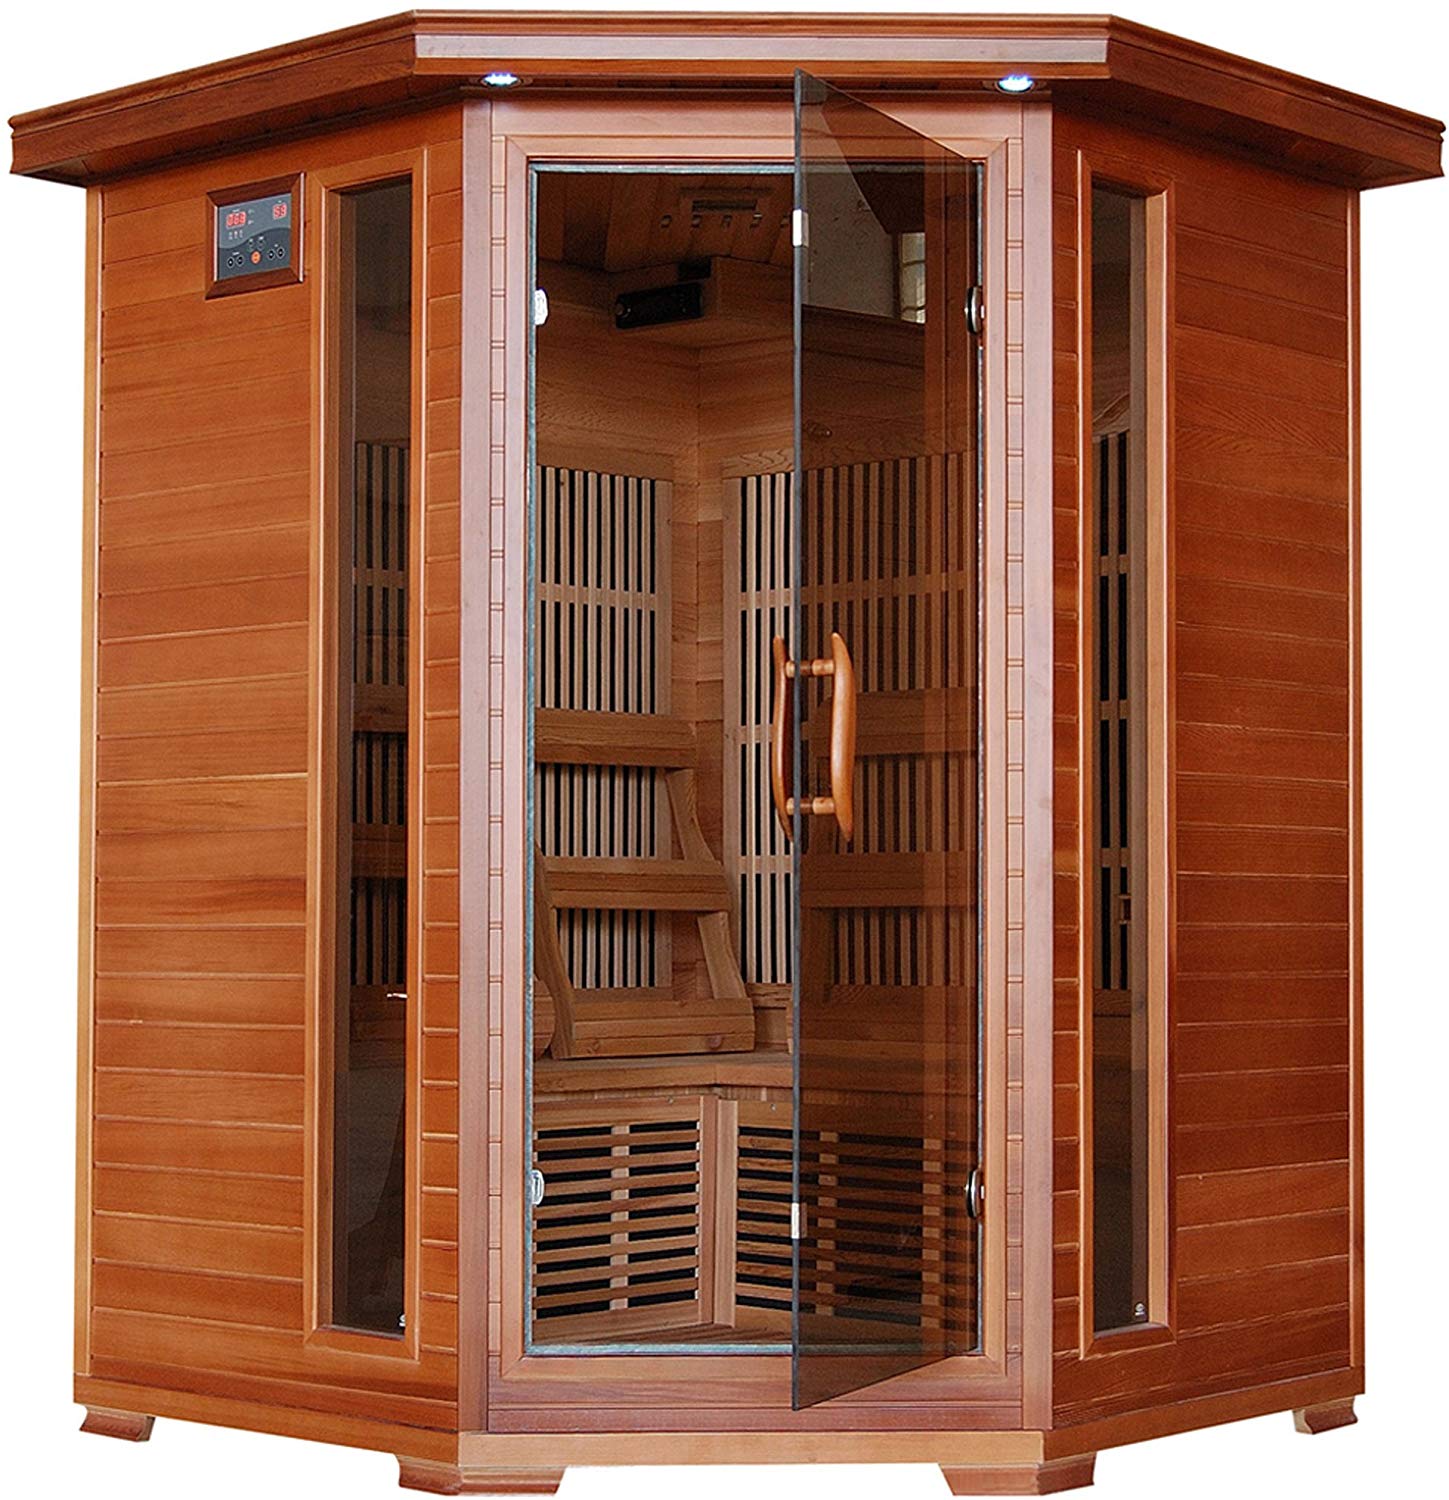 in-home infrared sauna against white background, glass door